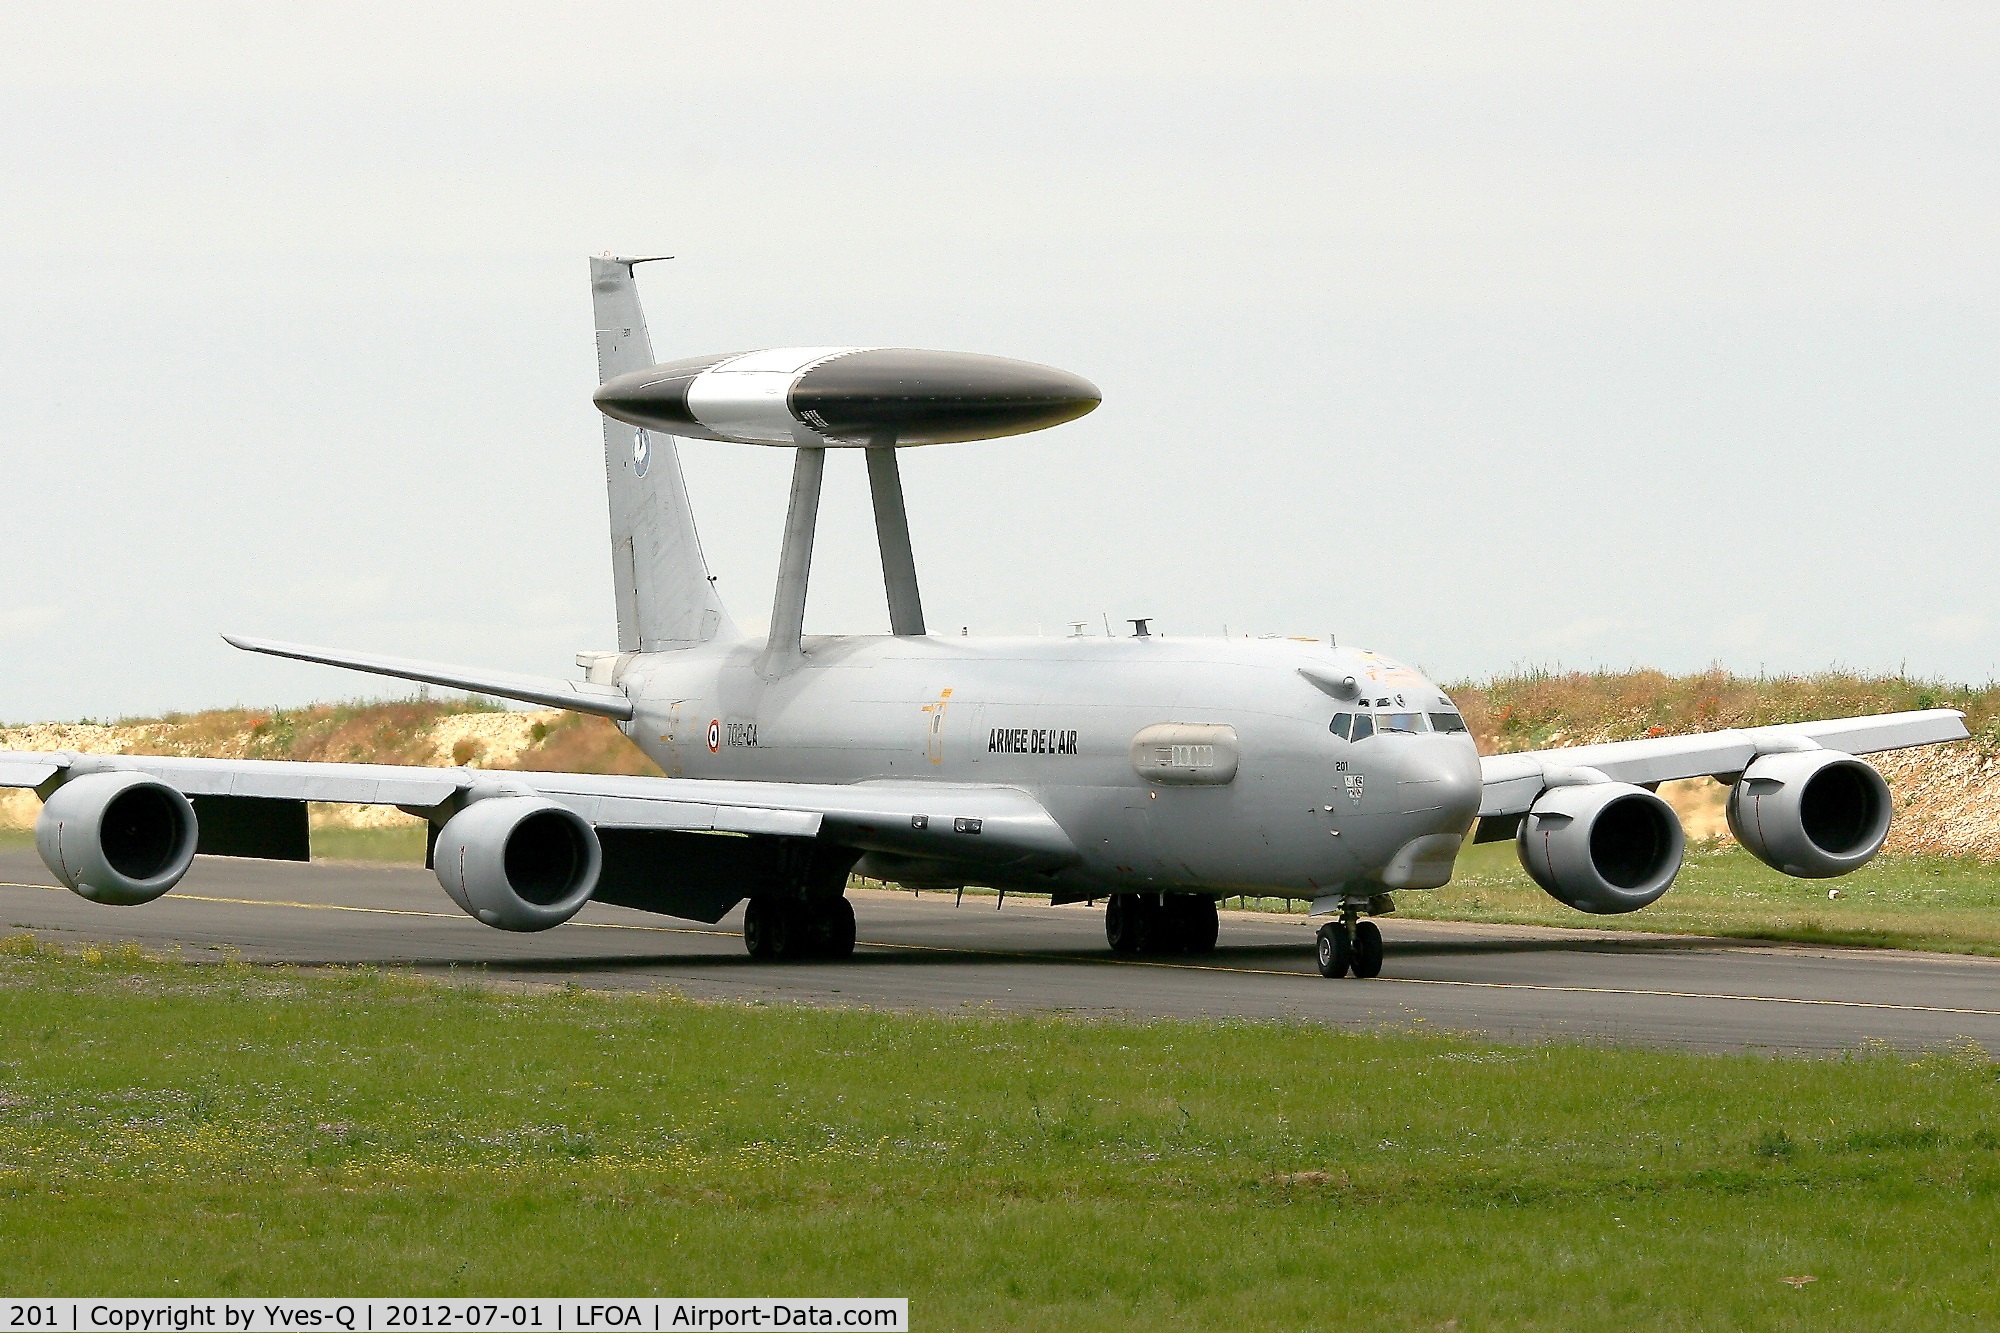 201, 1990 Boeing E-3F Sentry C/N 24115, French Air Force Boing E-3F SDCA, Avord Air Base 702 (LFOA)  Air Show in june 2012